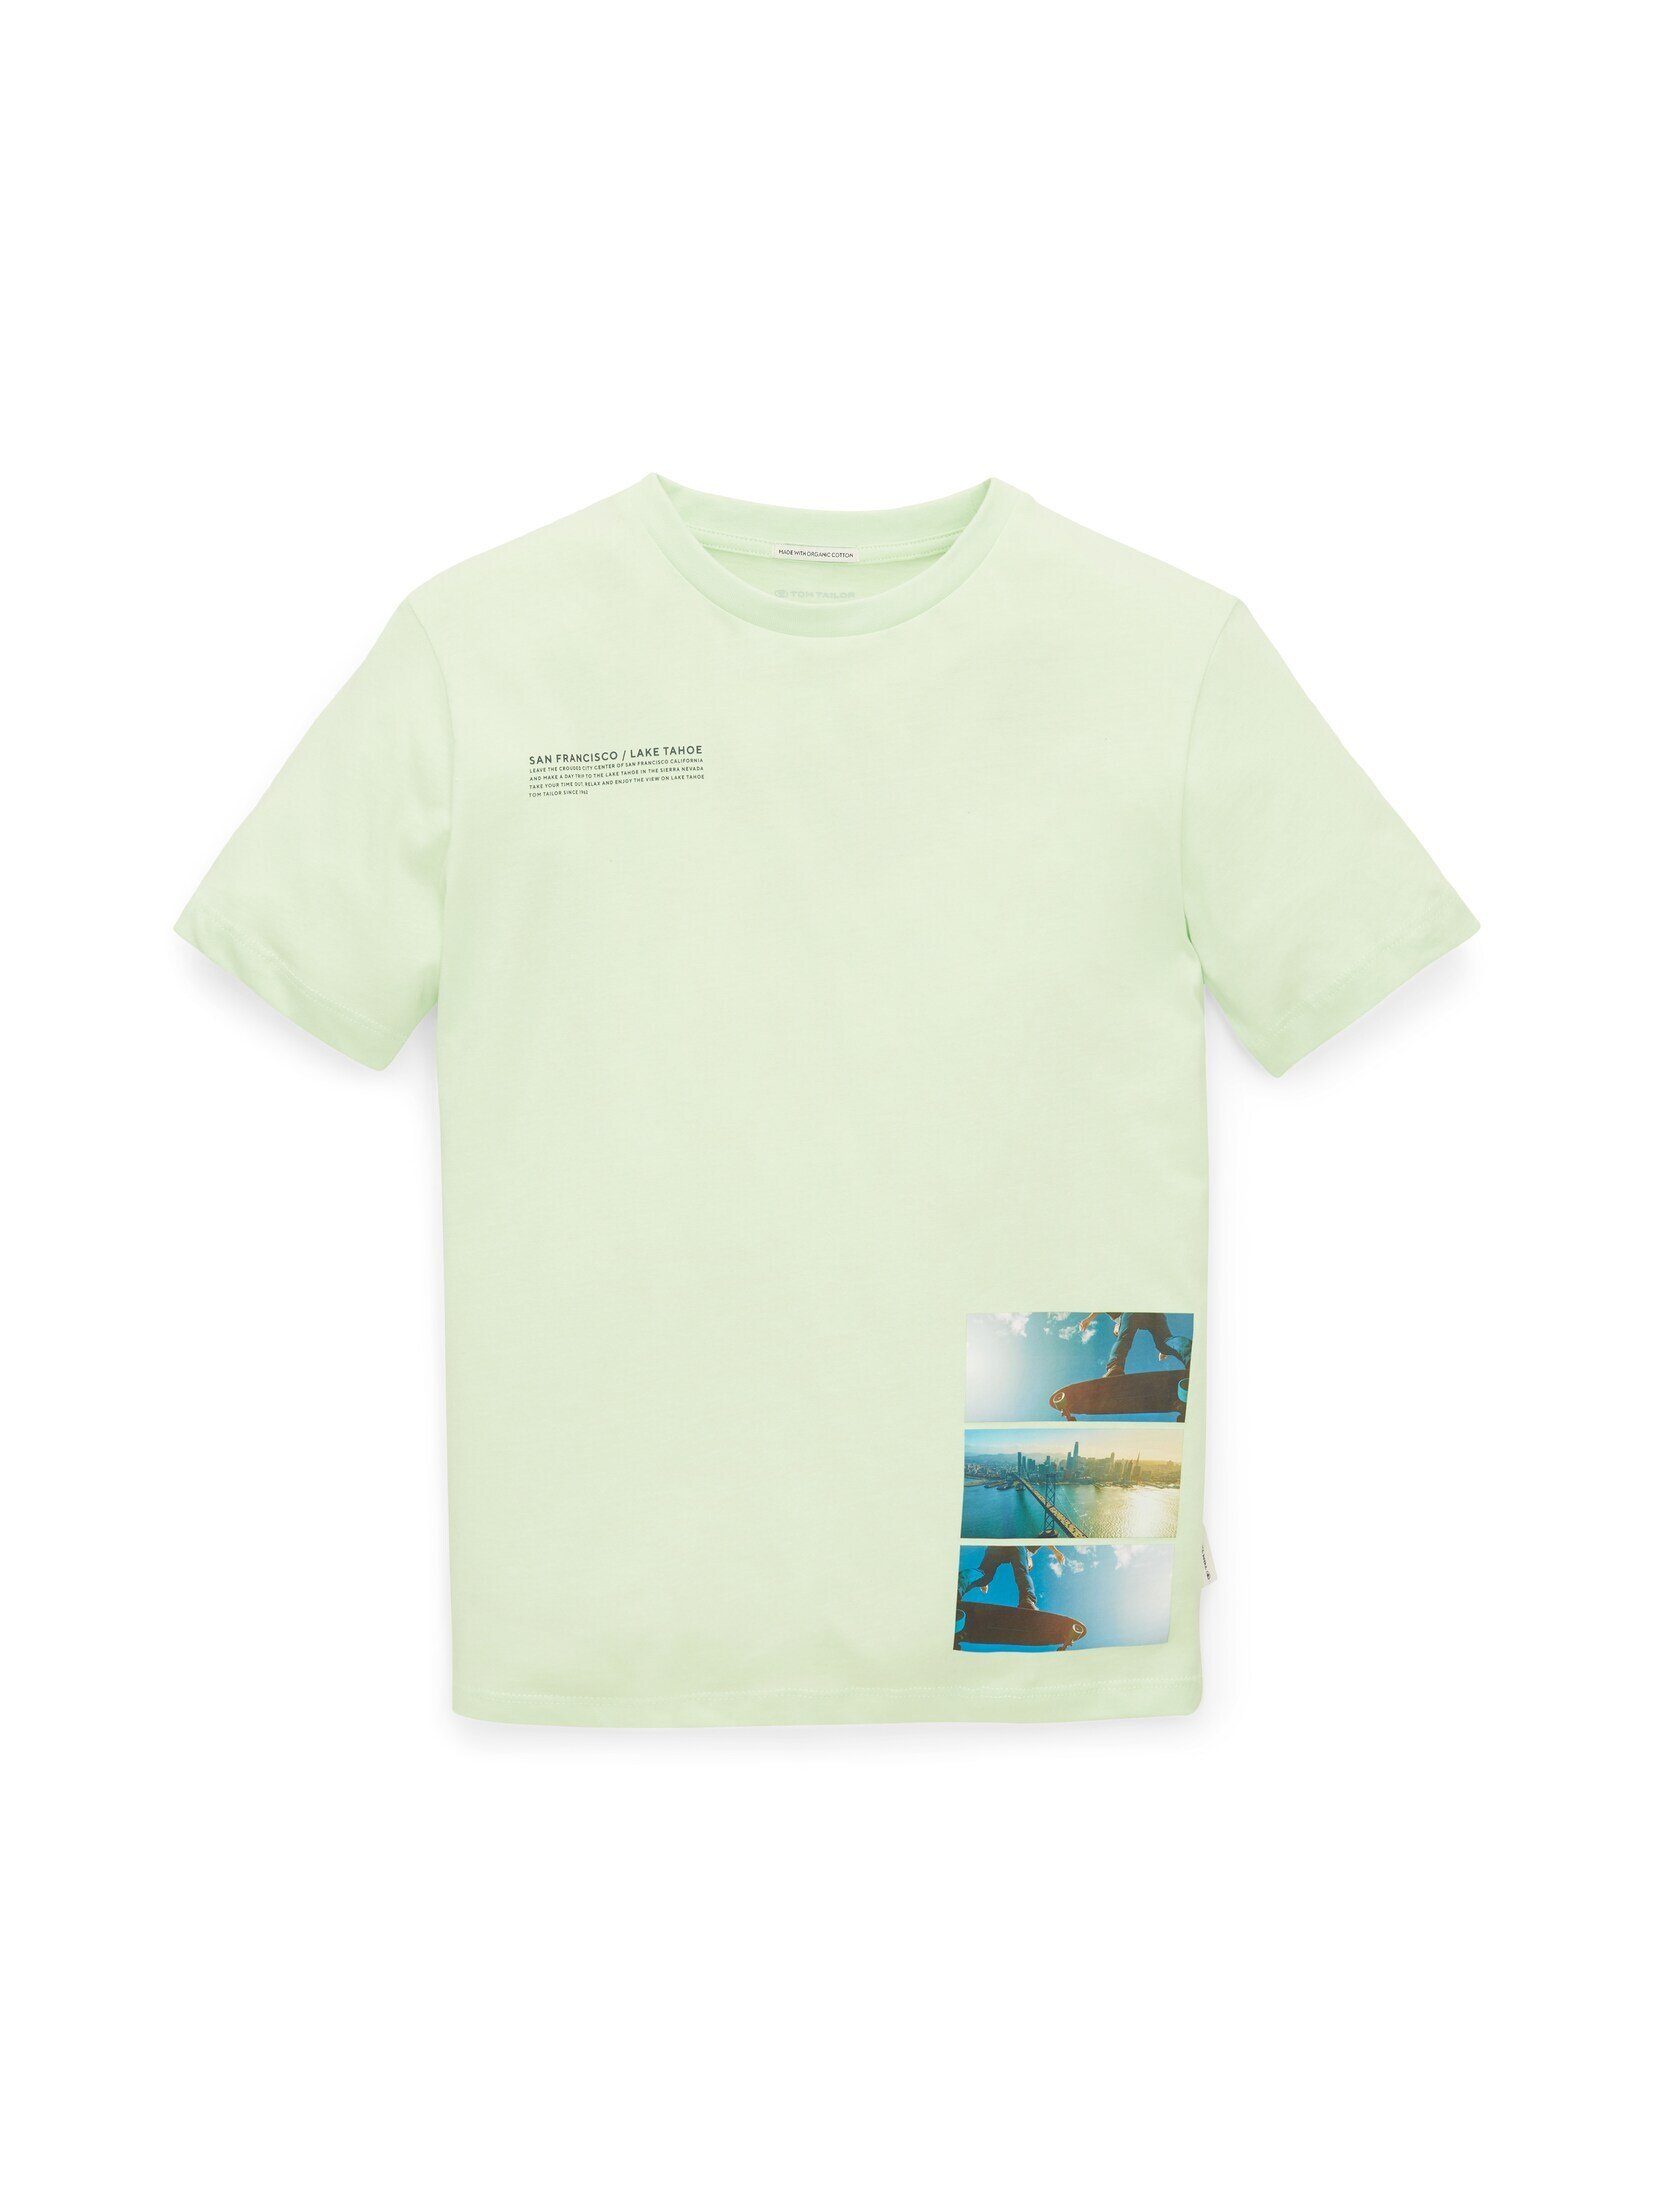 TOM TAILOR T-Shirt T-Shirt mit Fotoprint fresh apple lime green